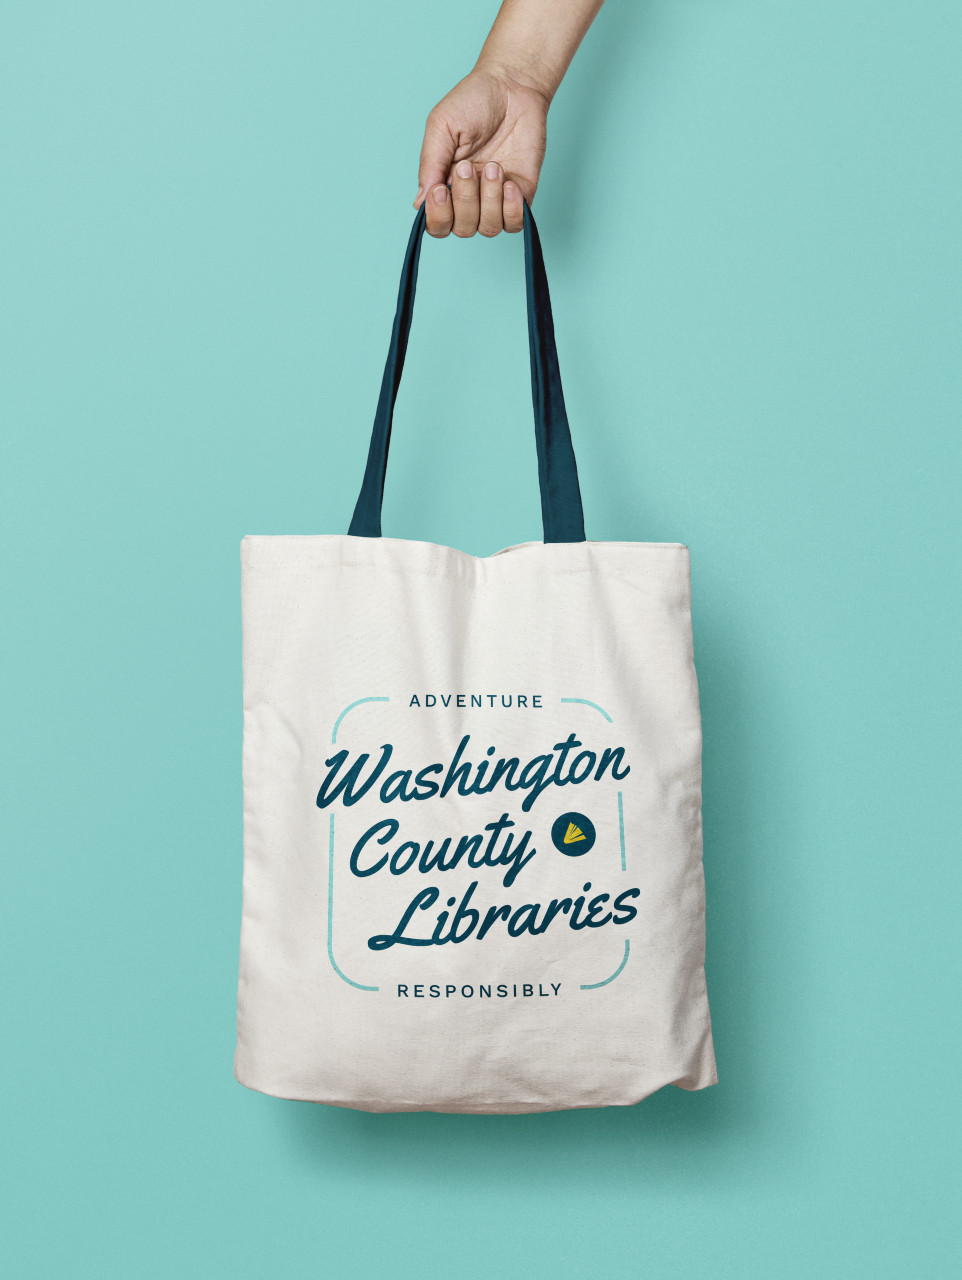 Tote bag that says: Washington County Libraries adventure responsibly